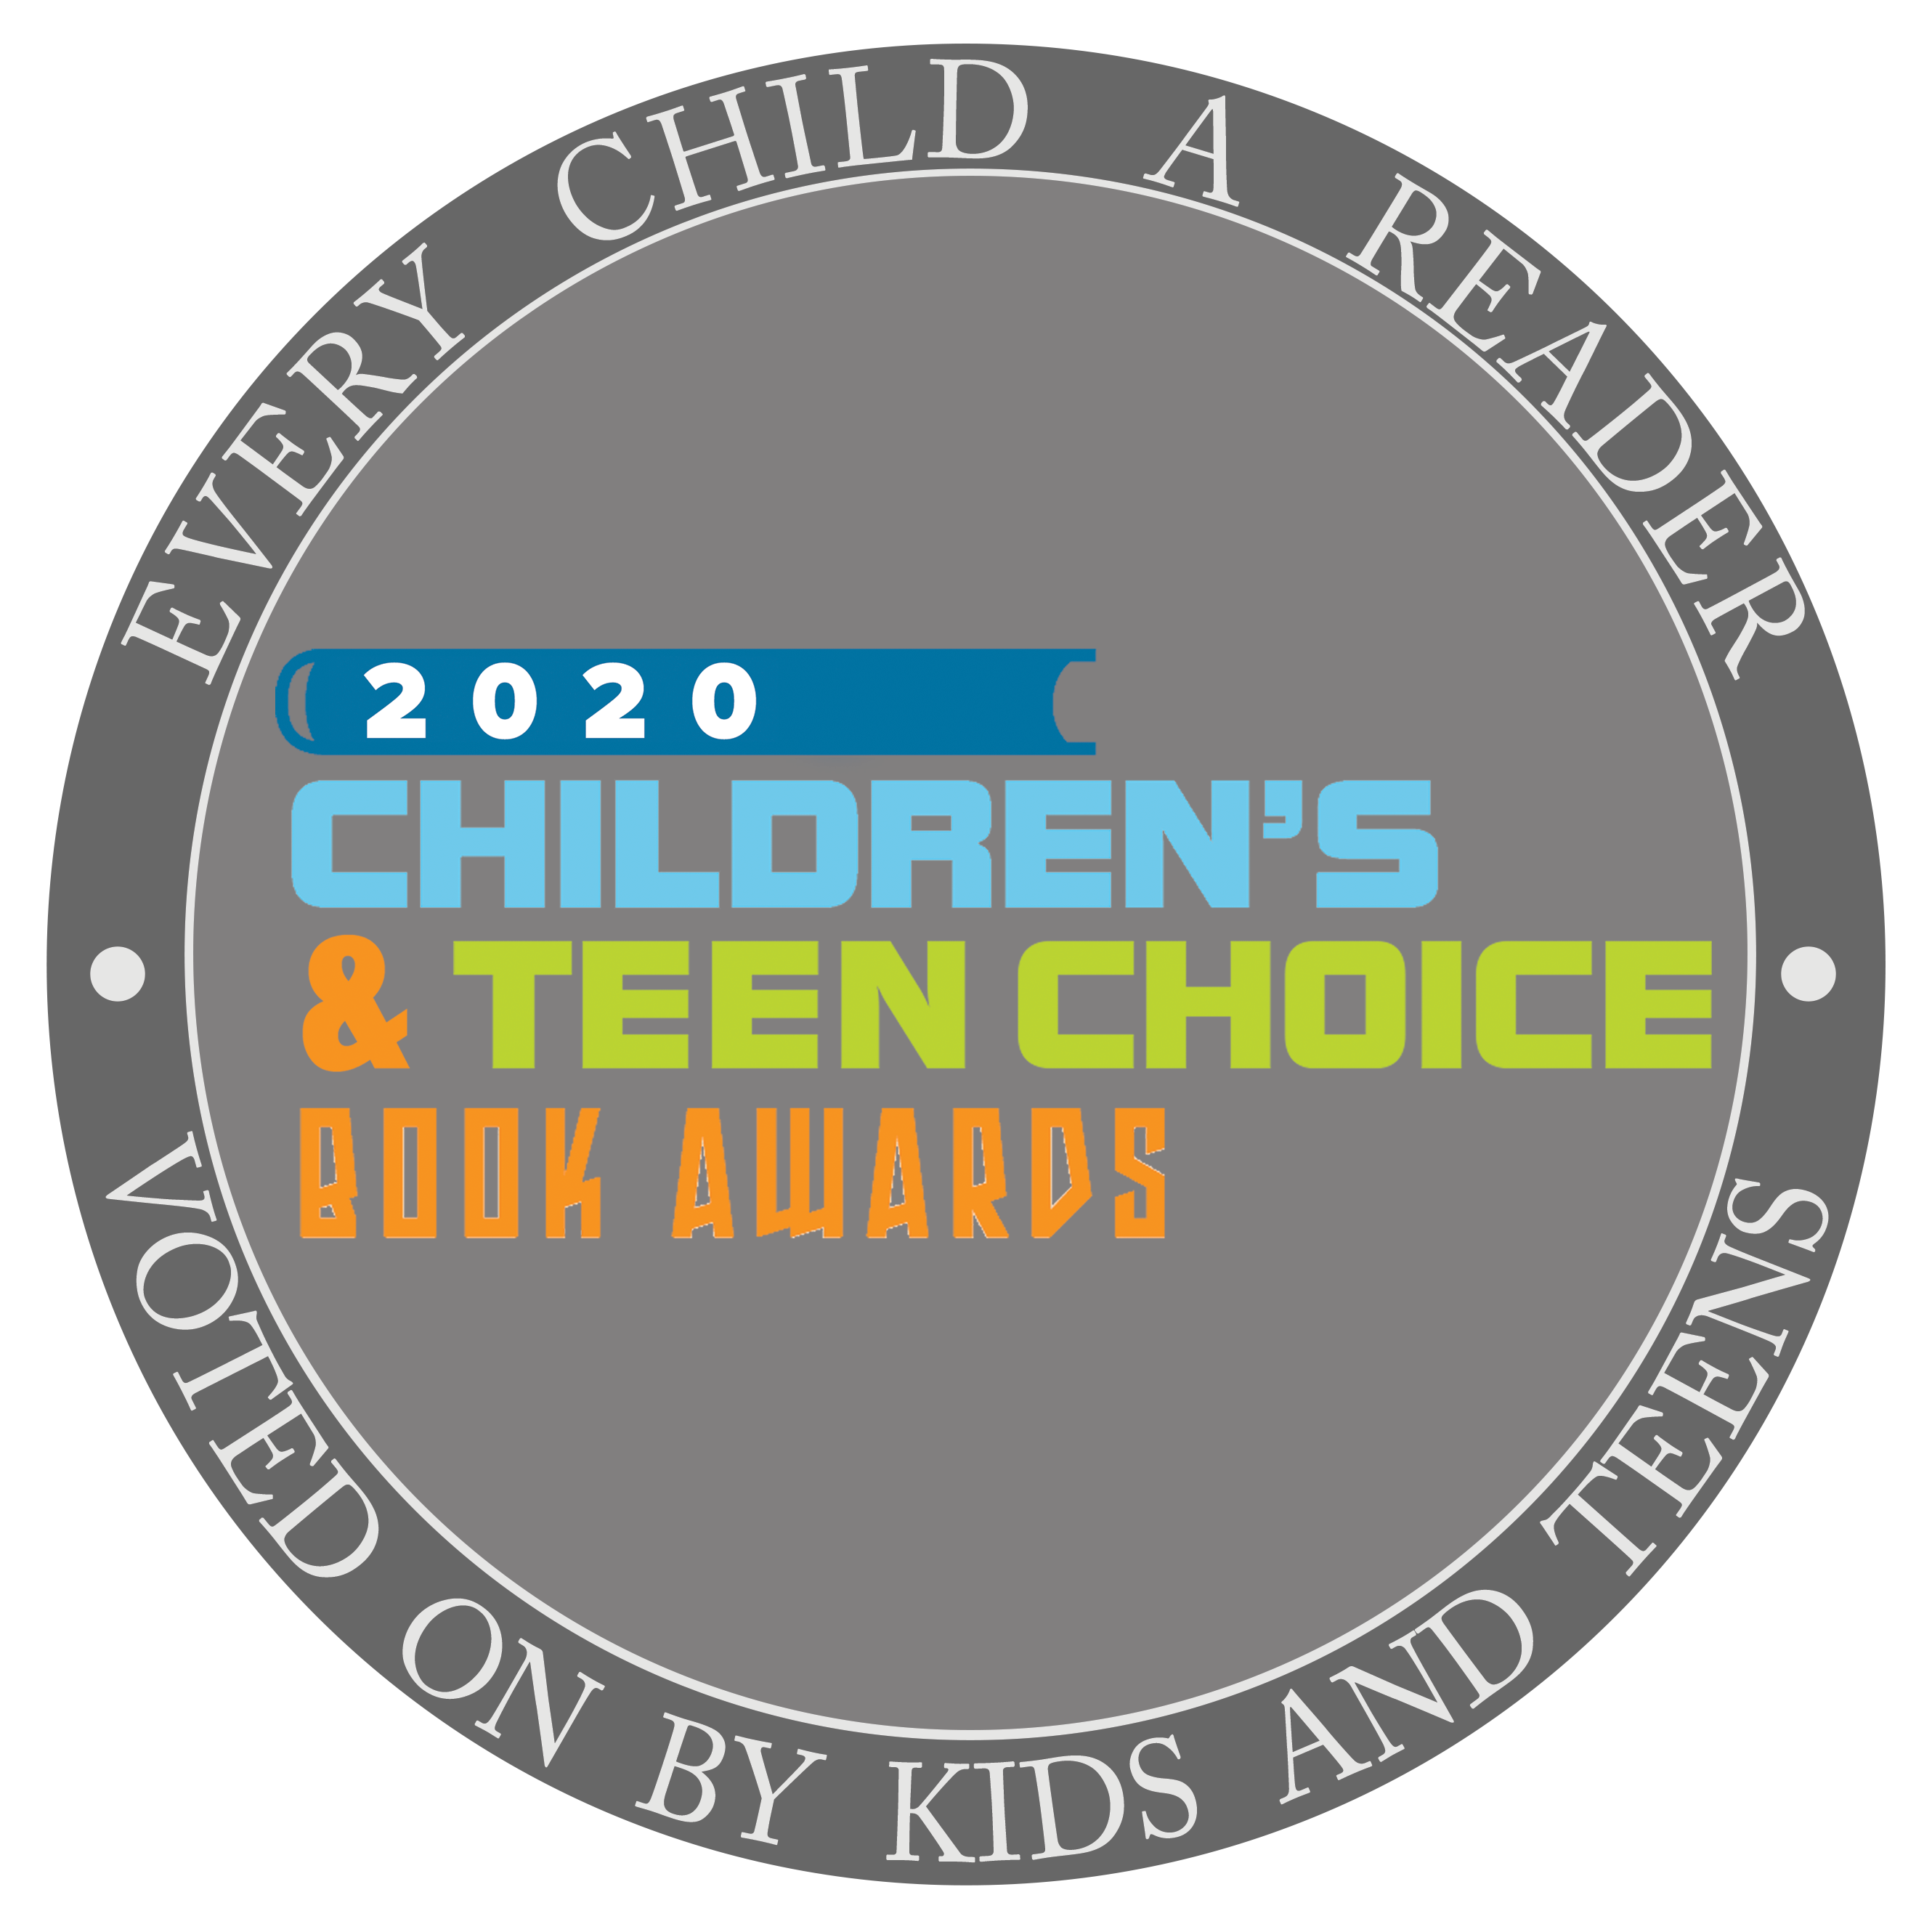 Book Awards seal